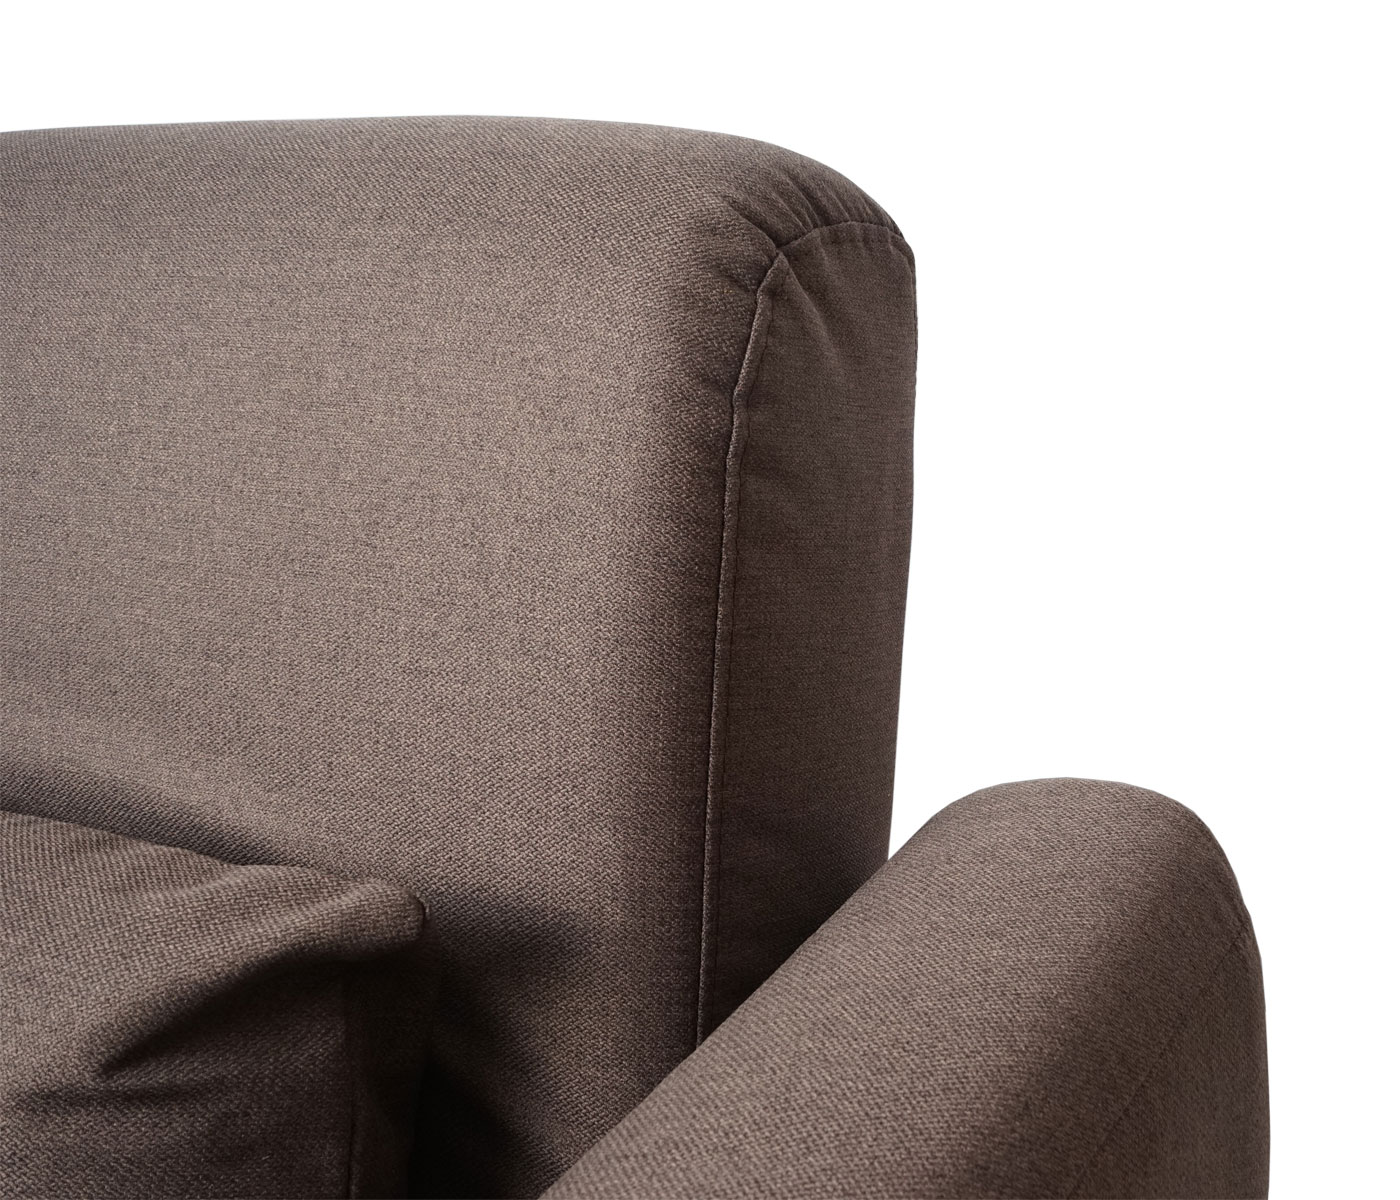 Sofa HWC-J20 Detailbild Rückenlehne